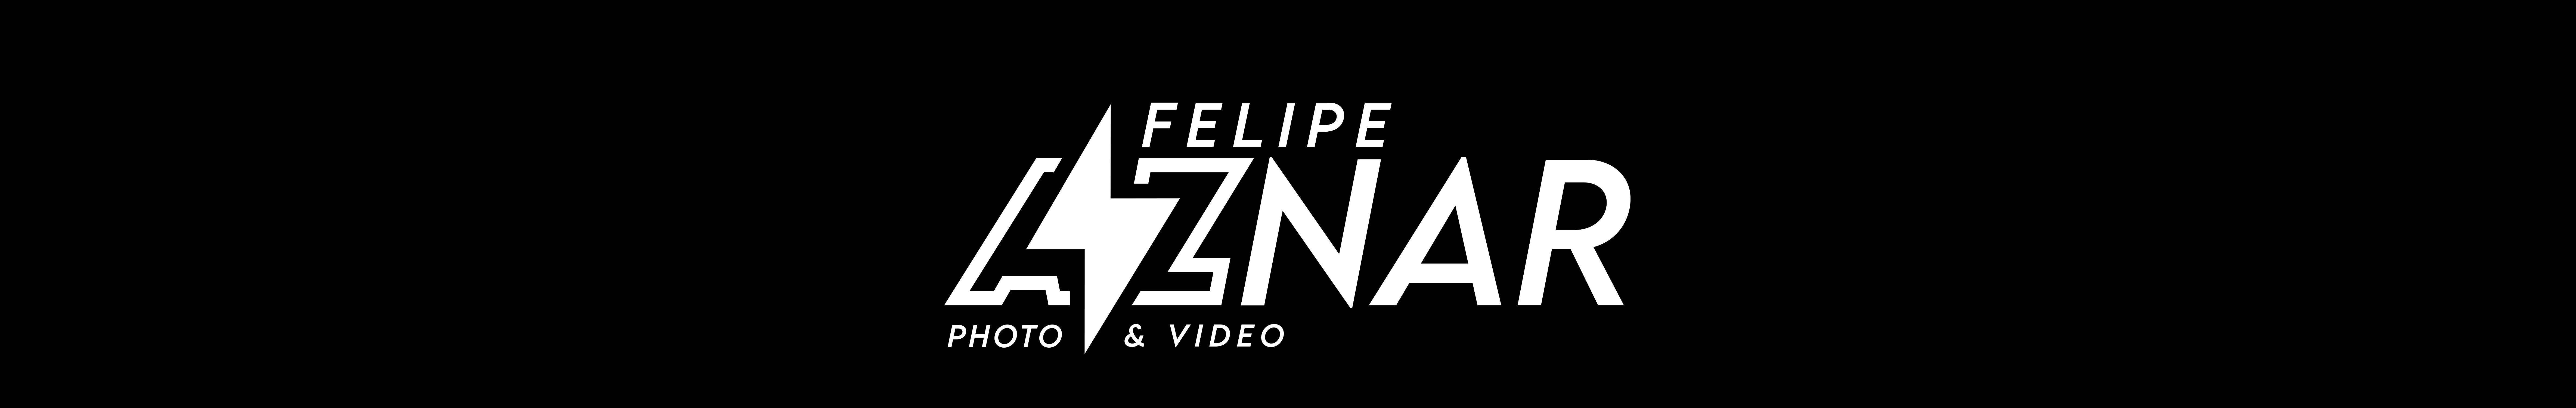 Banner de perfil de Felipe Aznar